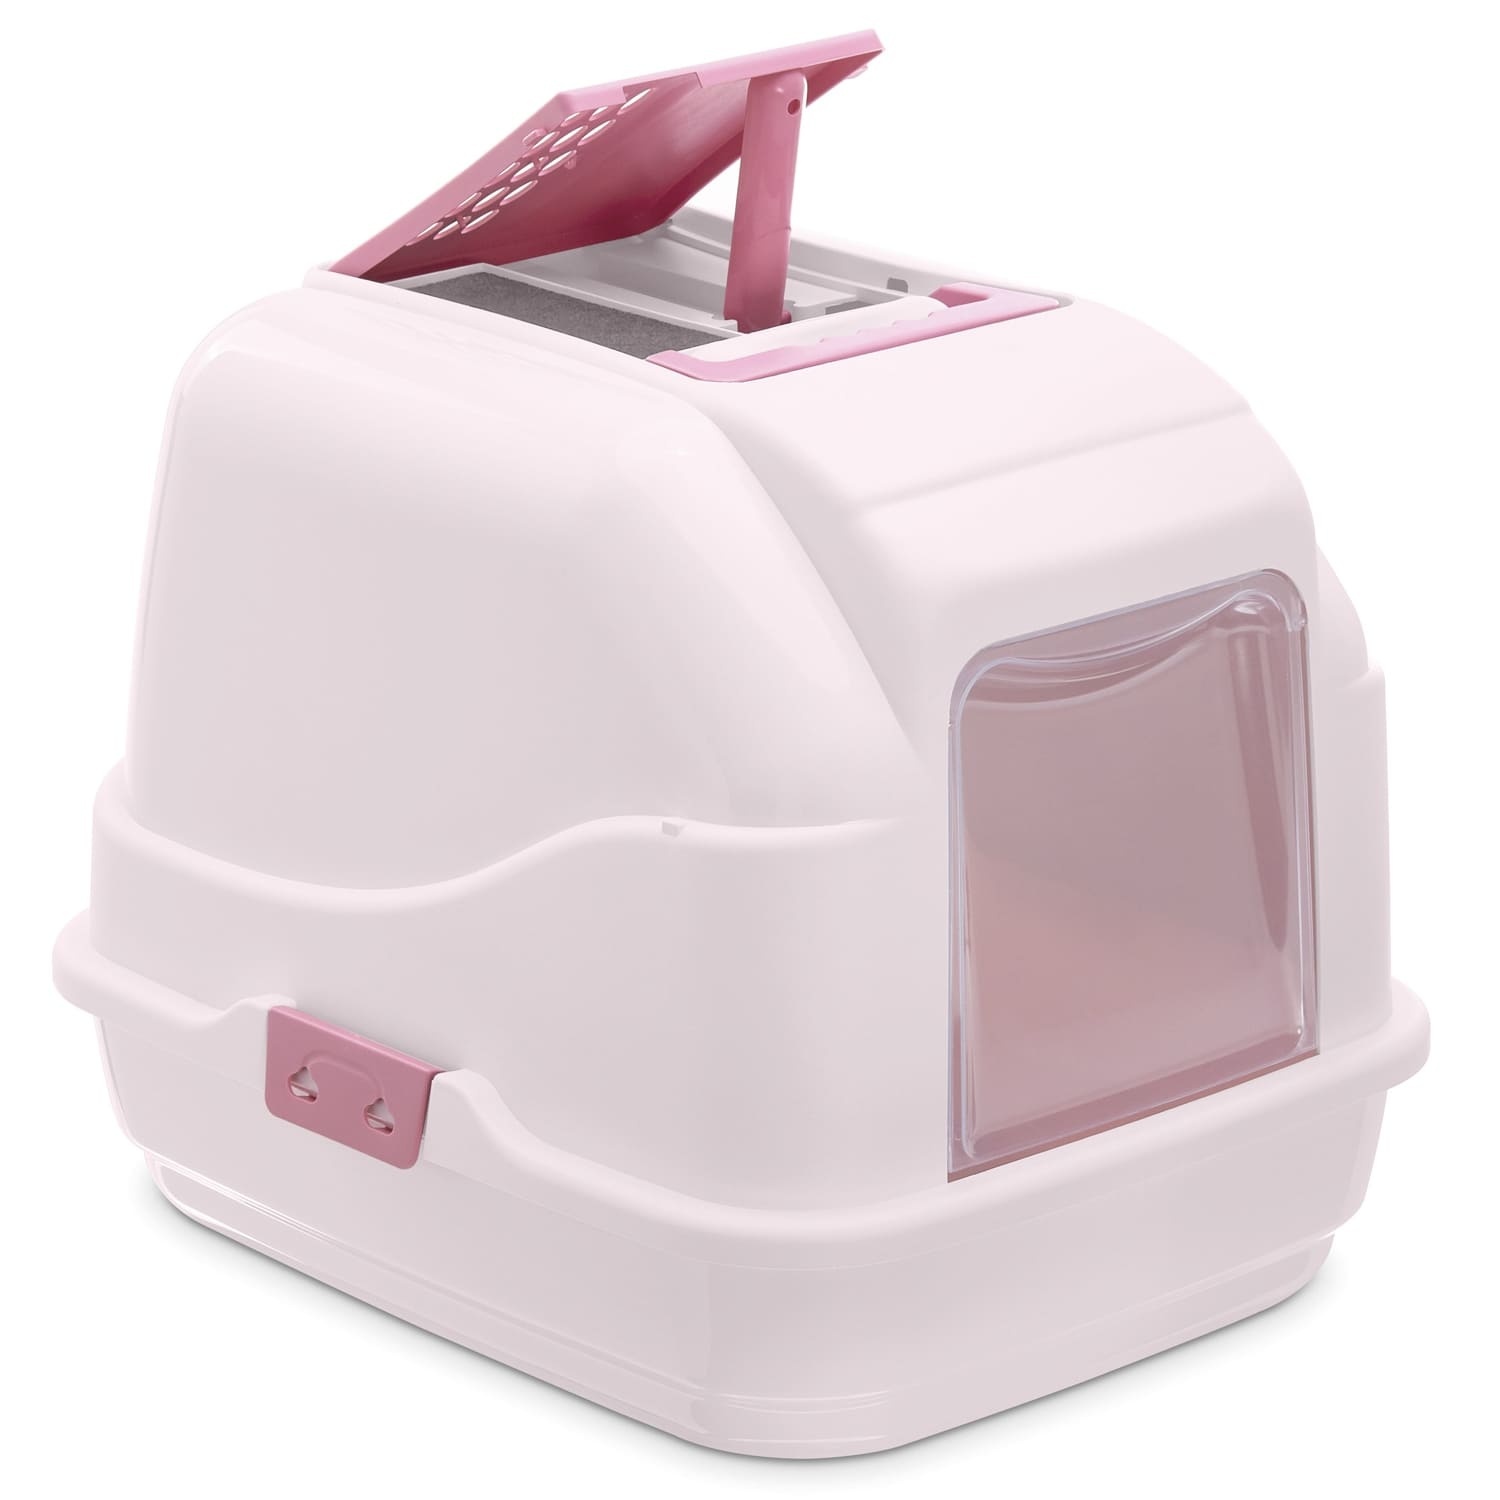 IMAC IMAC био-туалет для кошек, нежно-розовый (1,7 кг) цена и фото